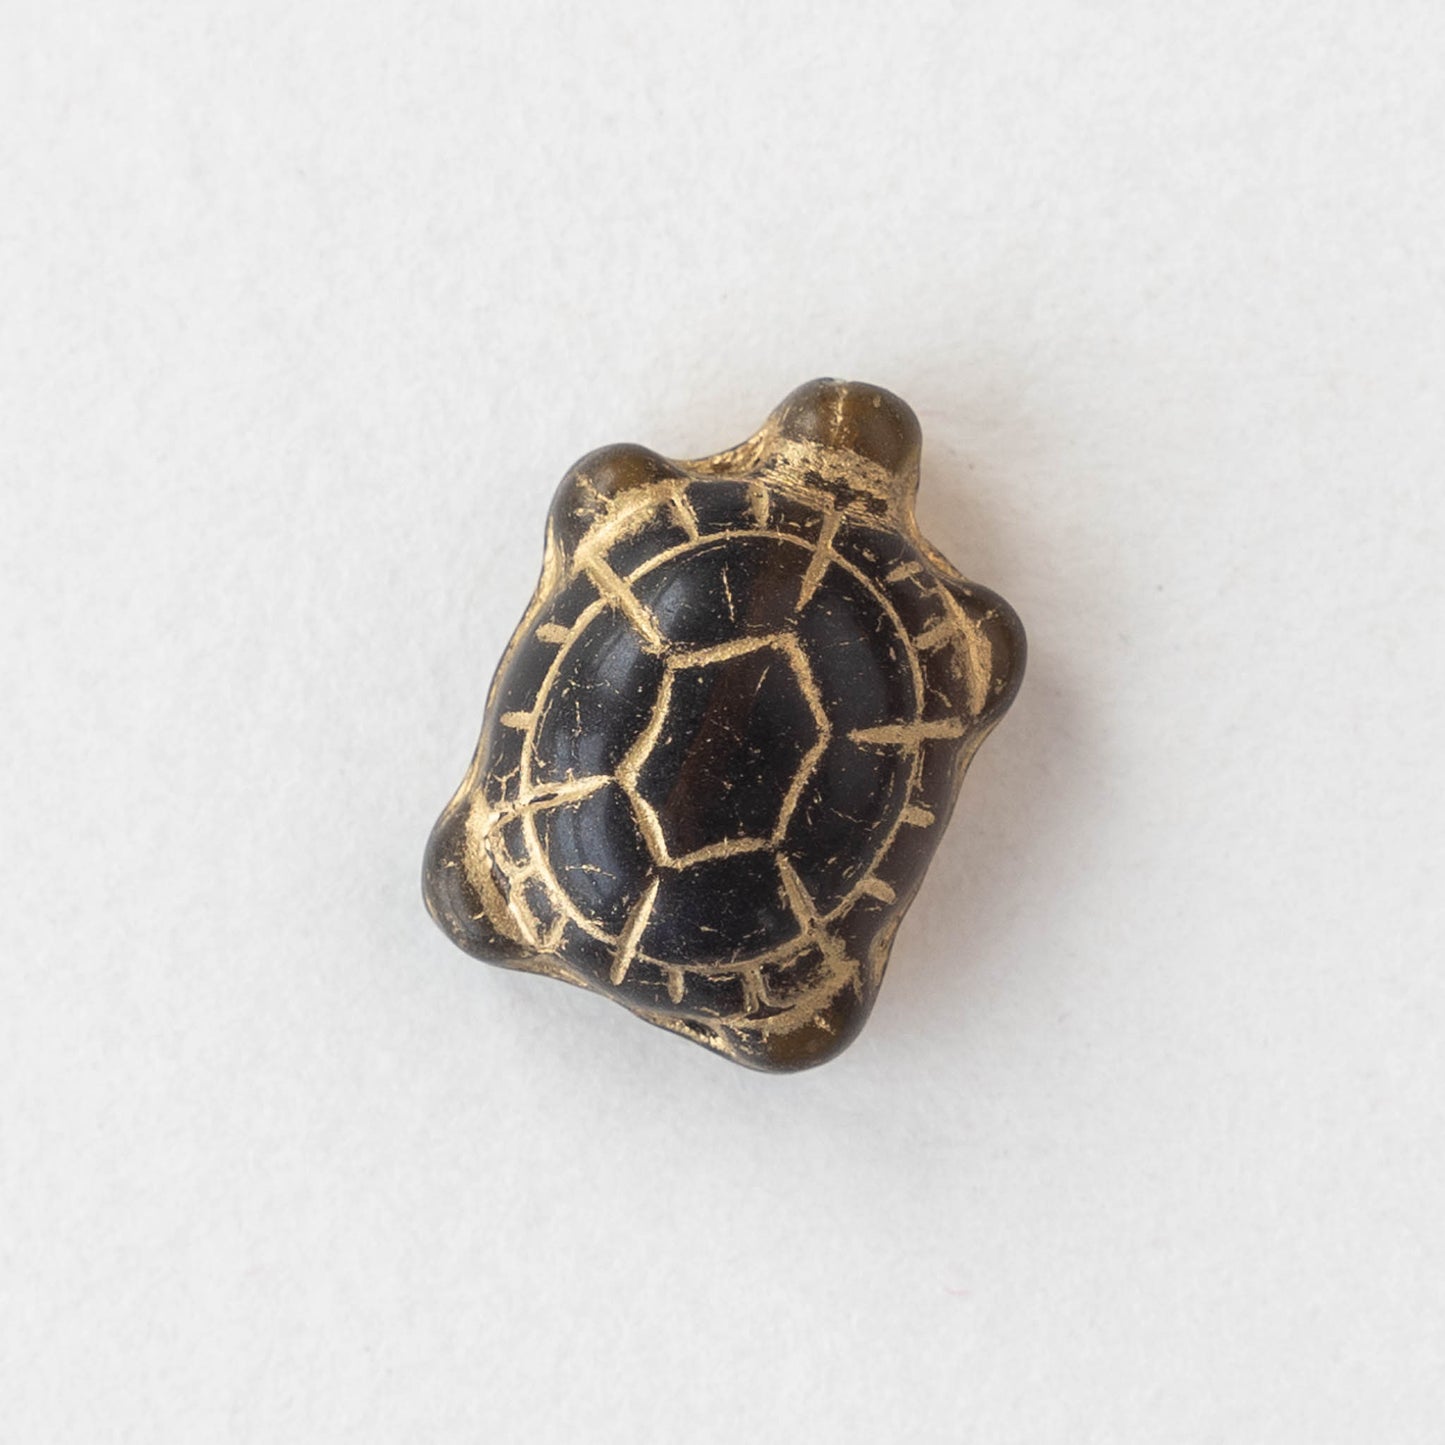 Glass Turtle Beads - Smokey Topaz with Gold Wash  - 6 beads